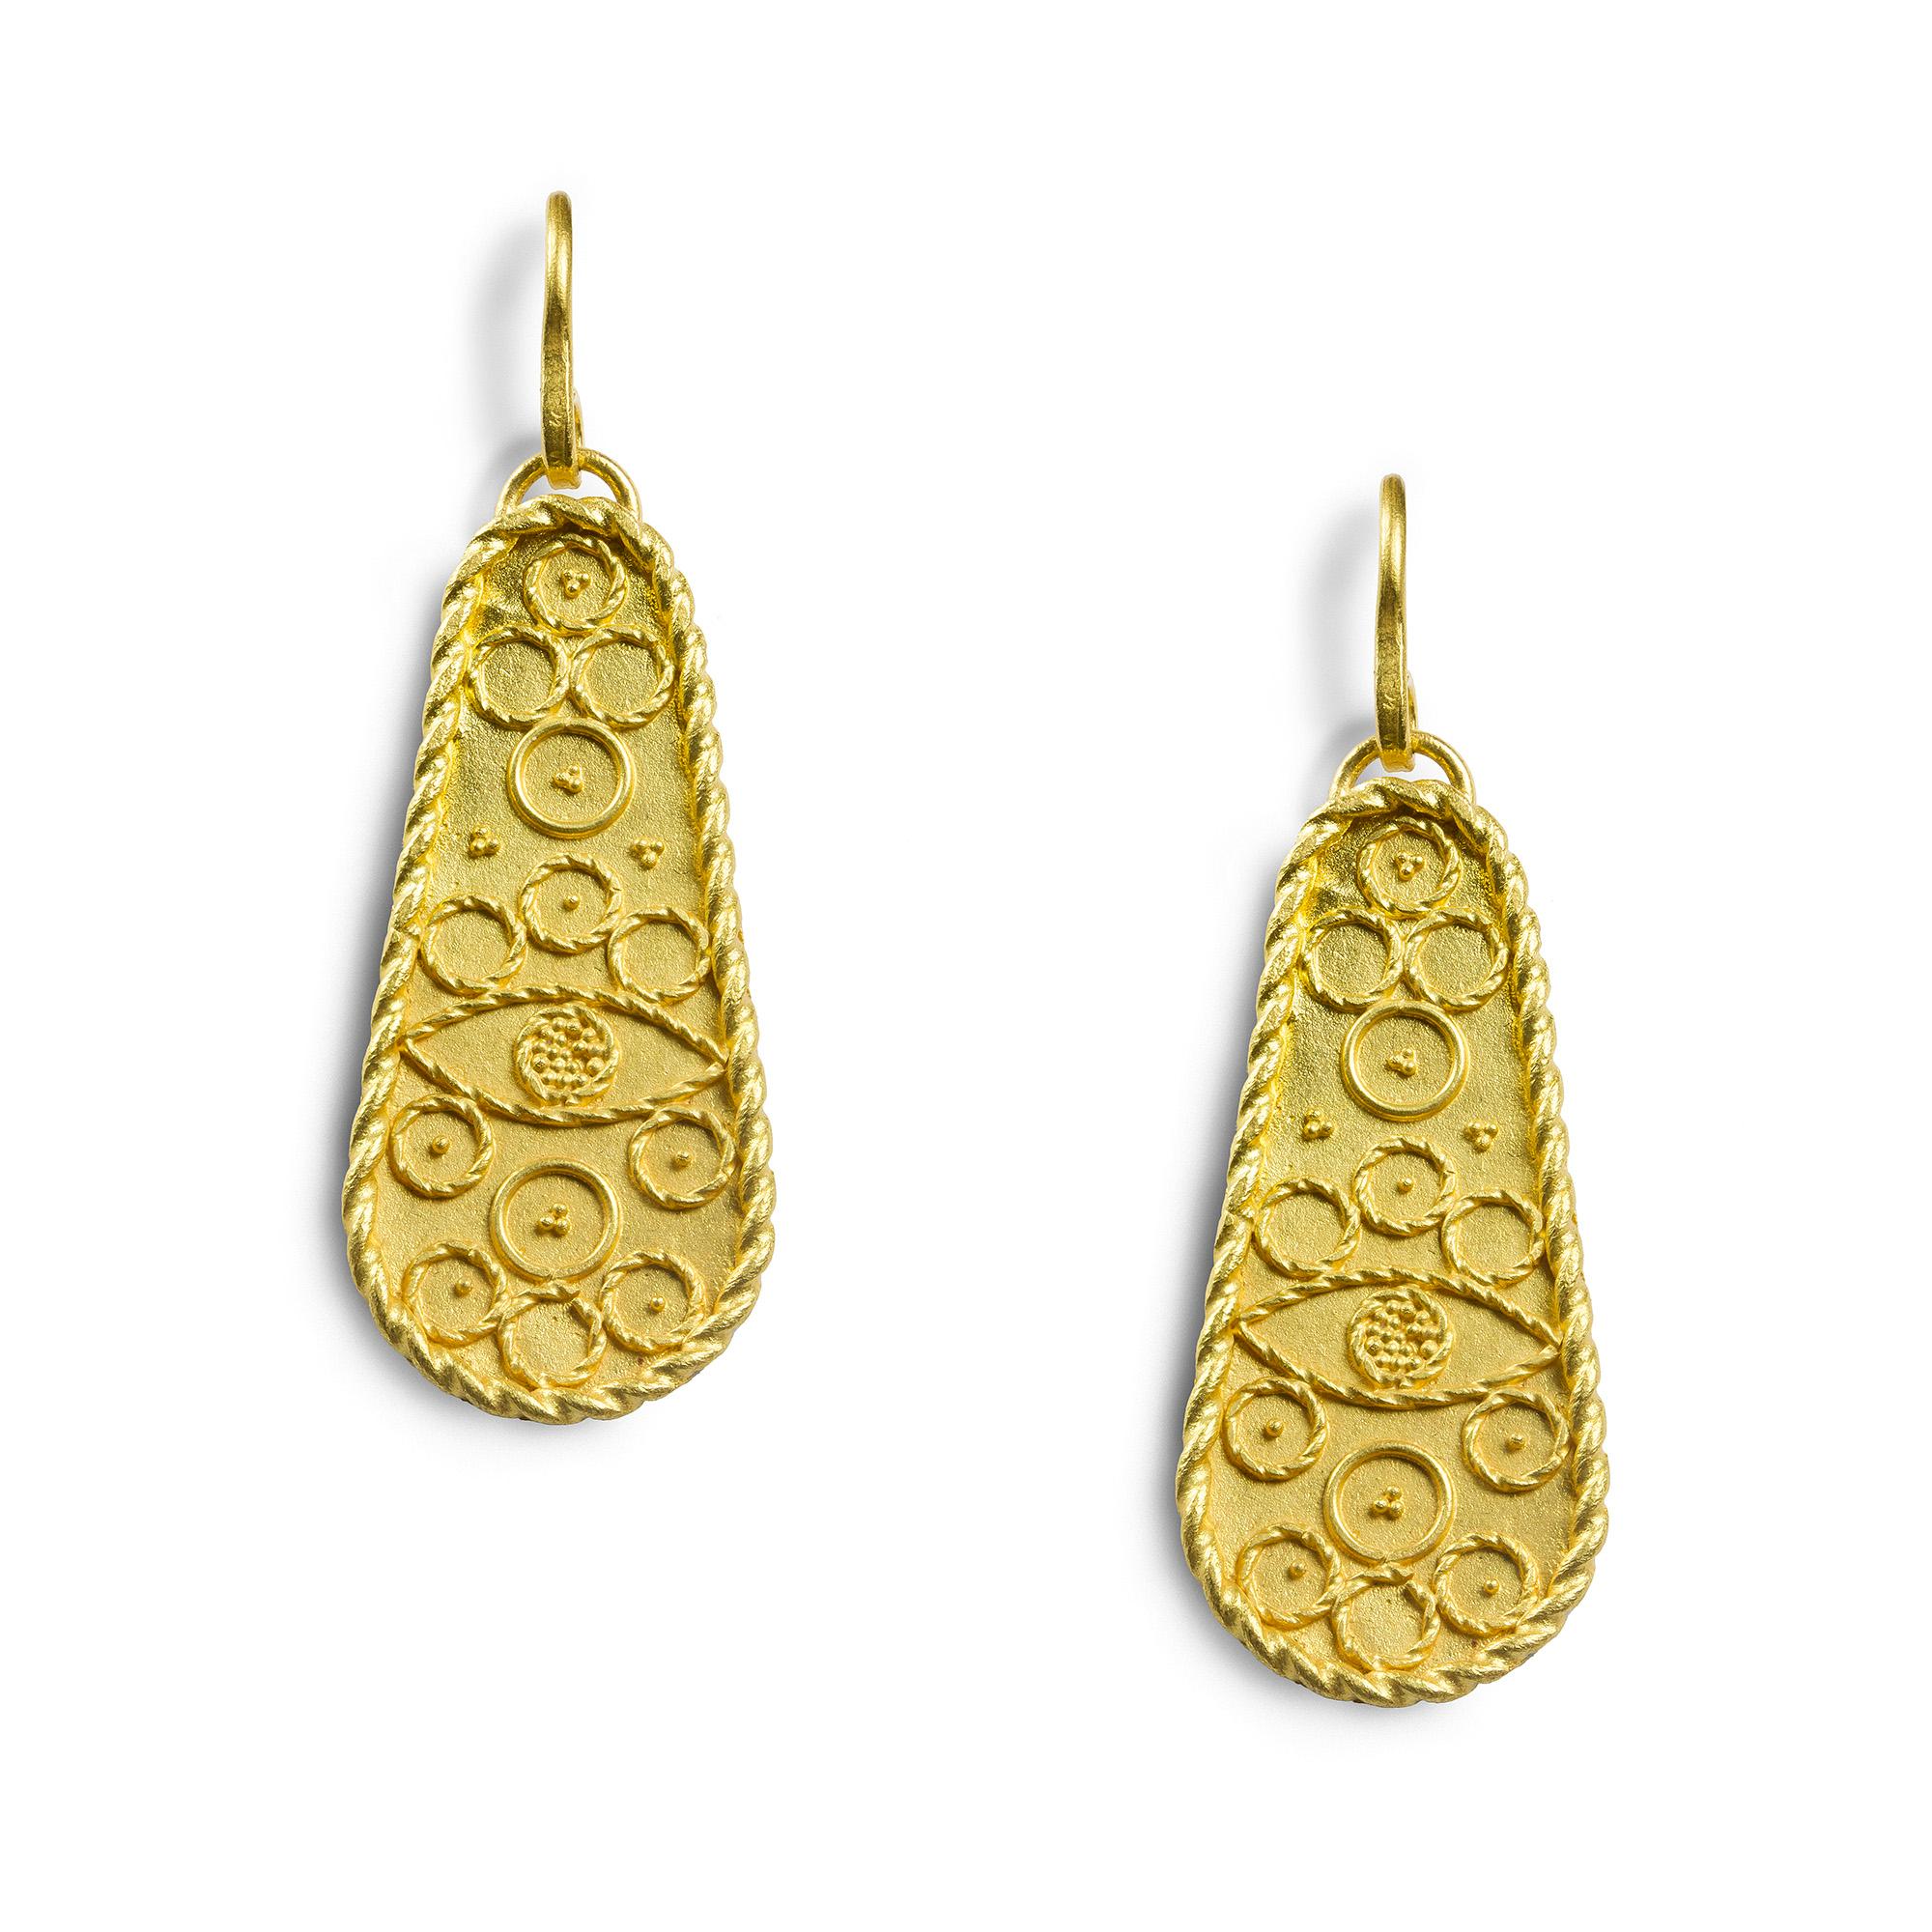 Modern Pair of Gold Plaque Earrings by Akelo